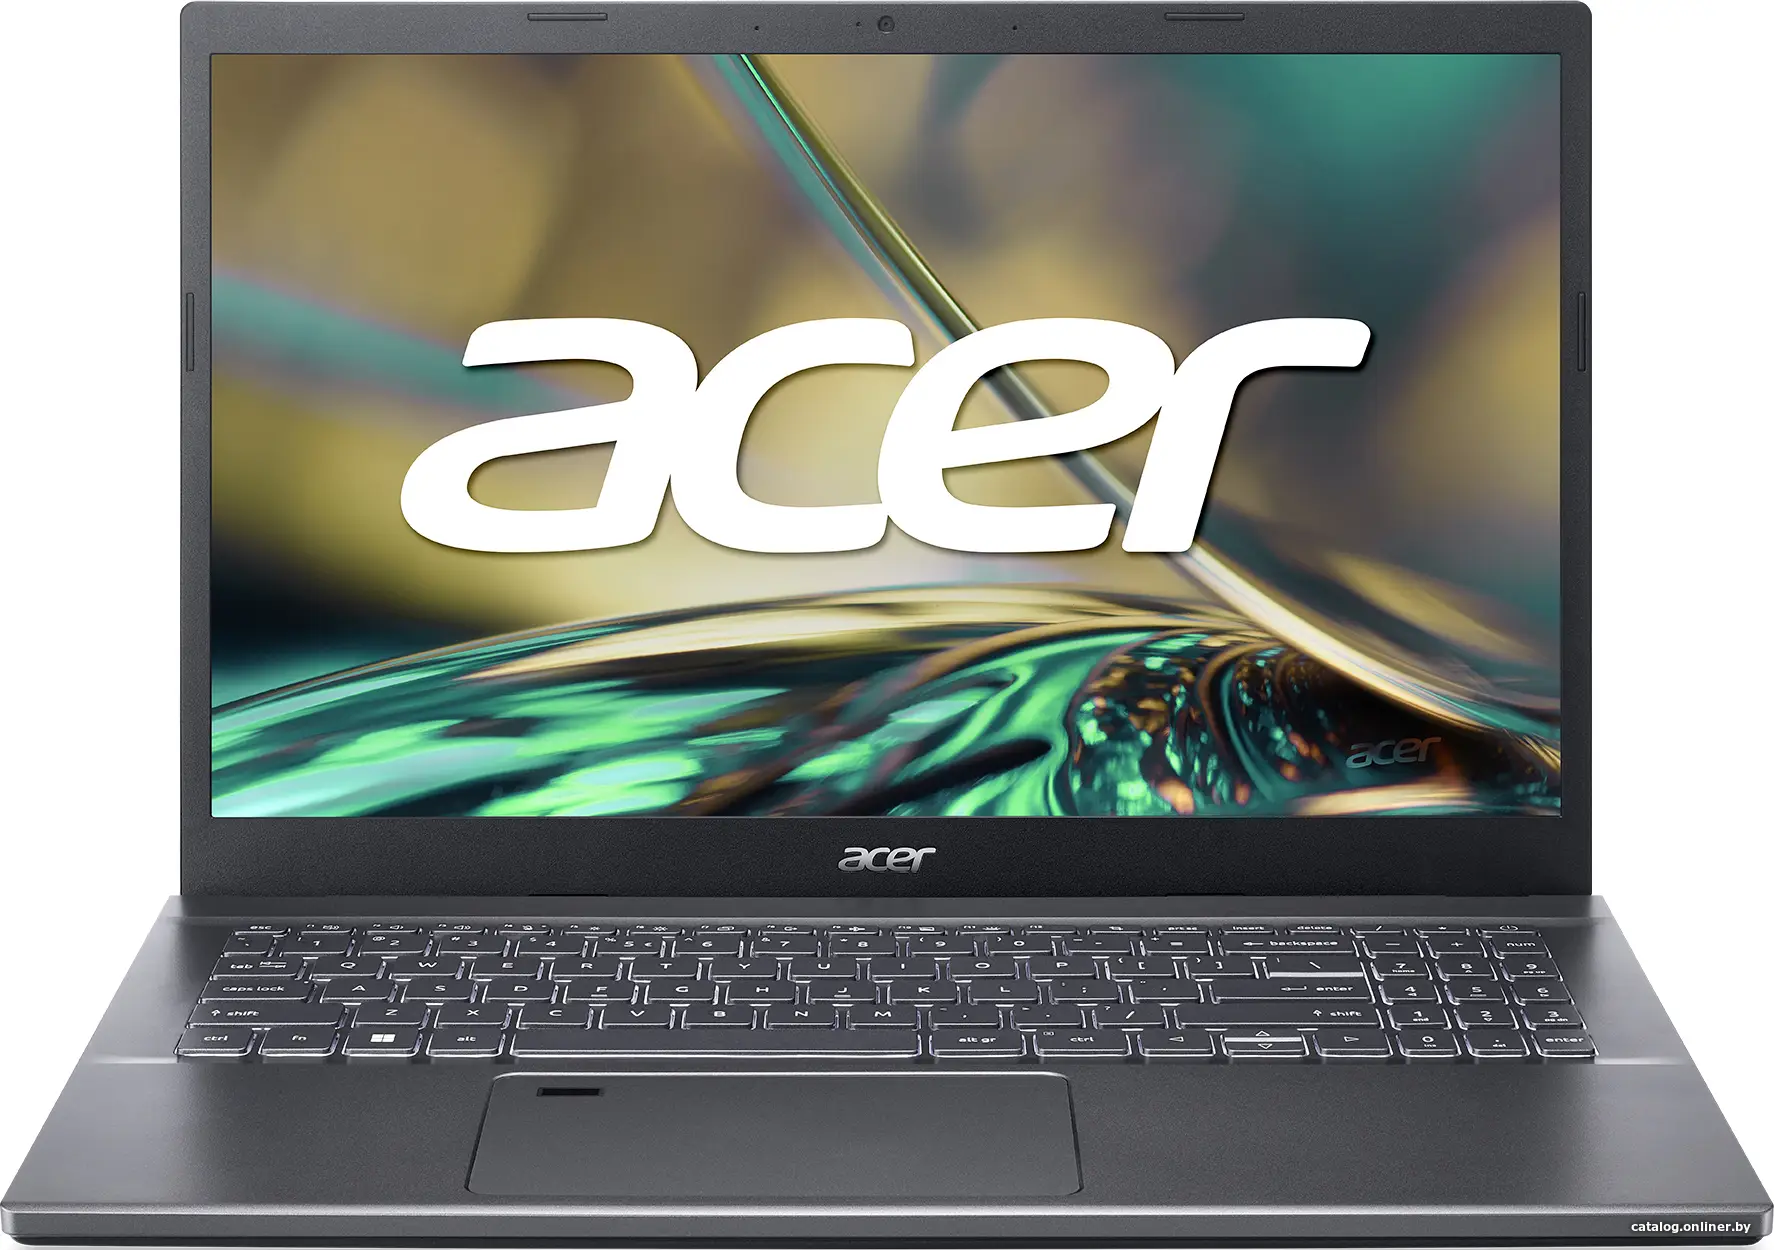 Купить Ноутбук Acer Aspire 5 A515-57-52ZZ NX.KN3CD.003, цена, опт и розница